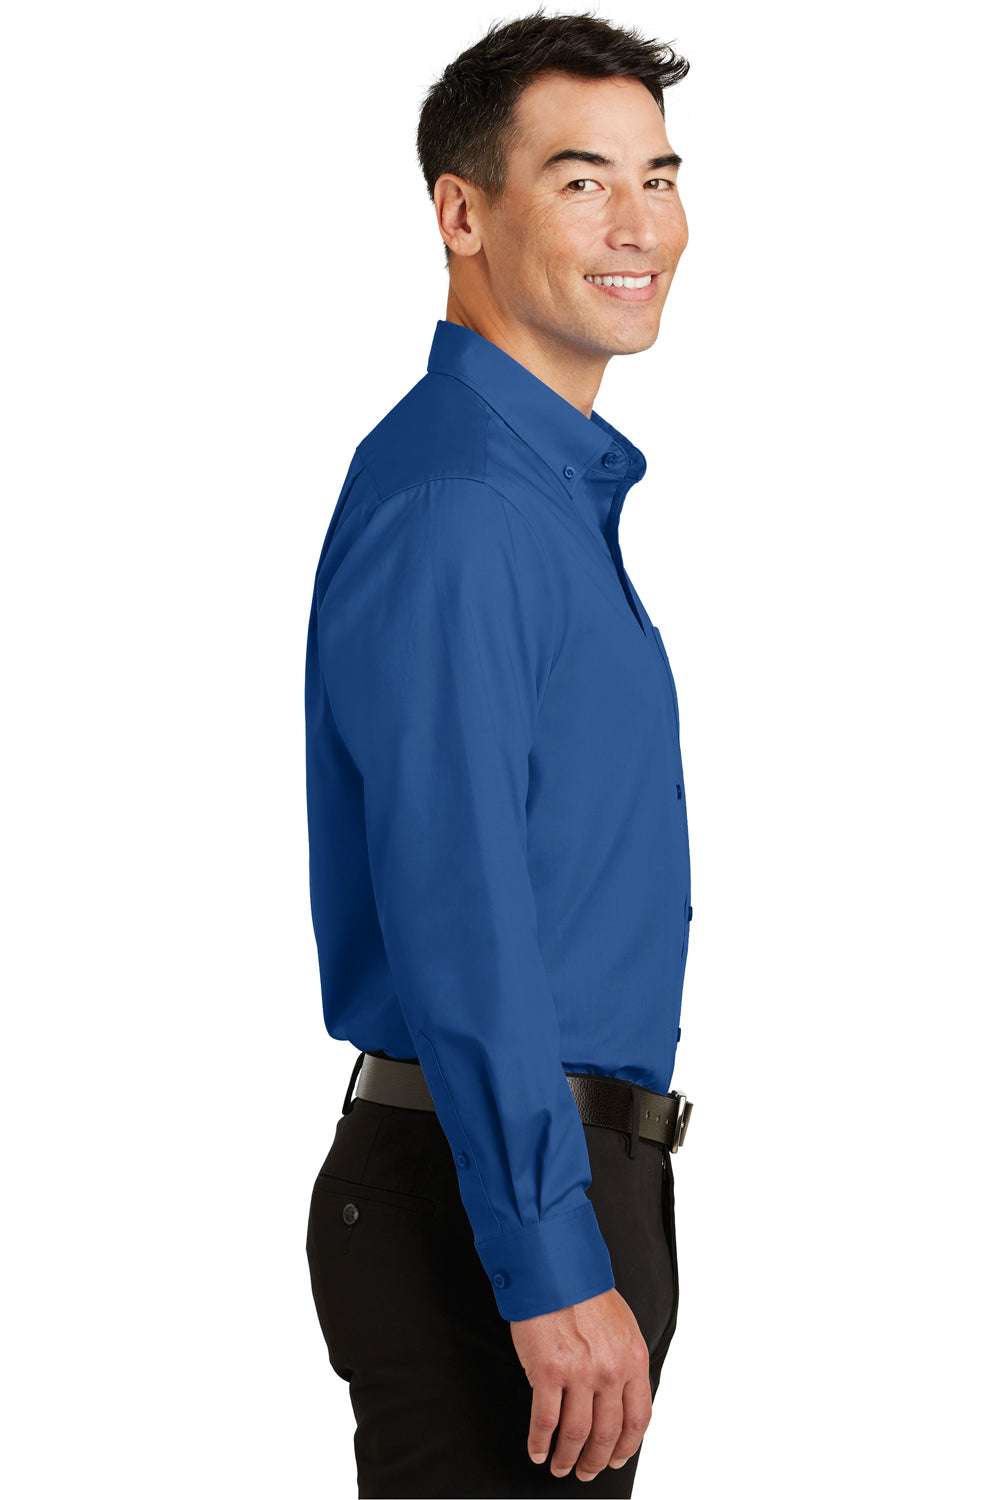 Port Authority S663 Mens SuperPro Wrinkle Resistant Long Sleeve Button Down Shirt w/ Pocket Royal Blue Side